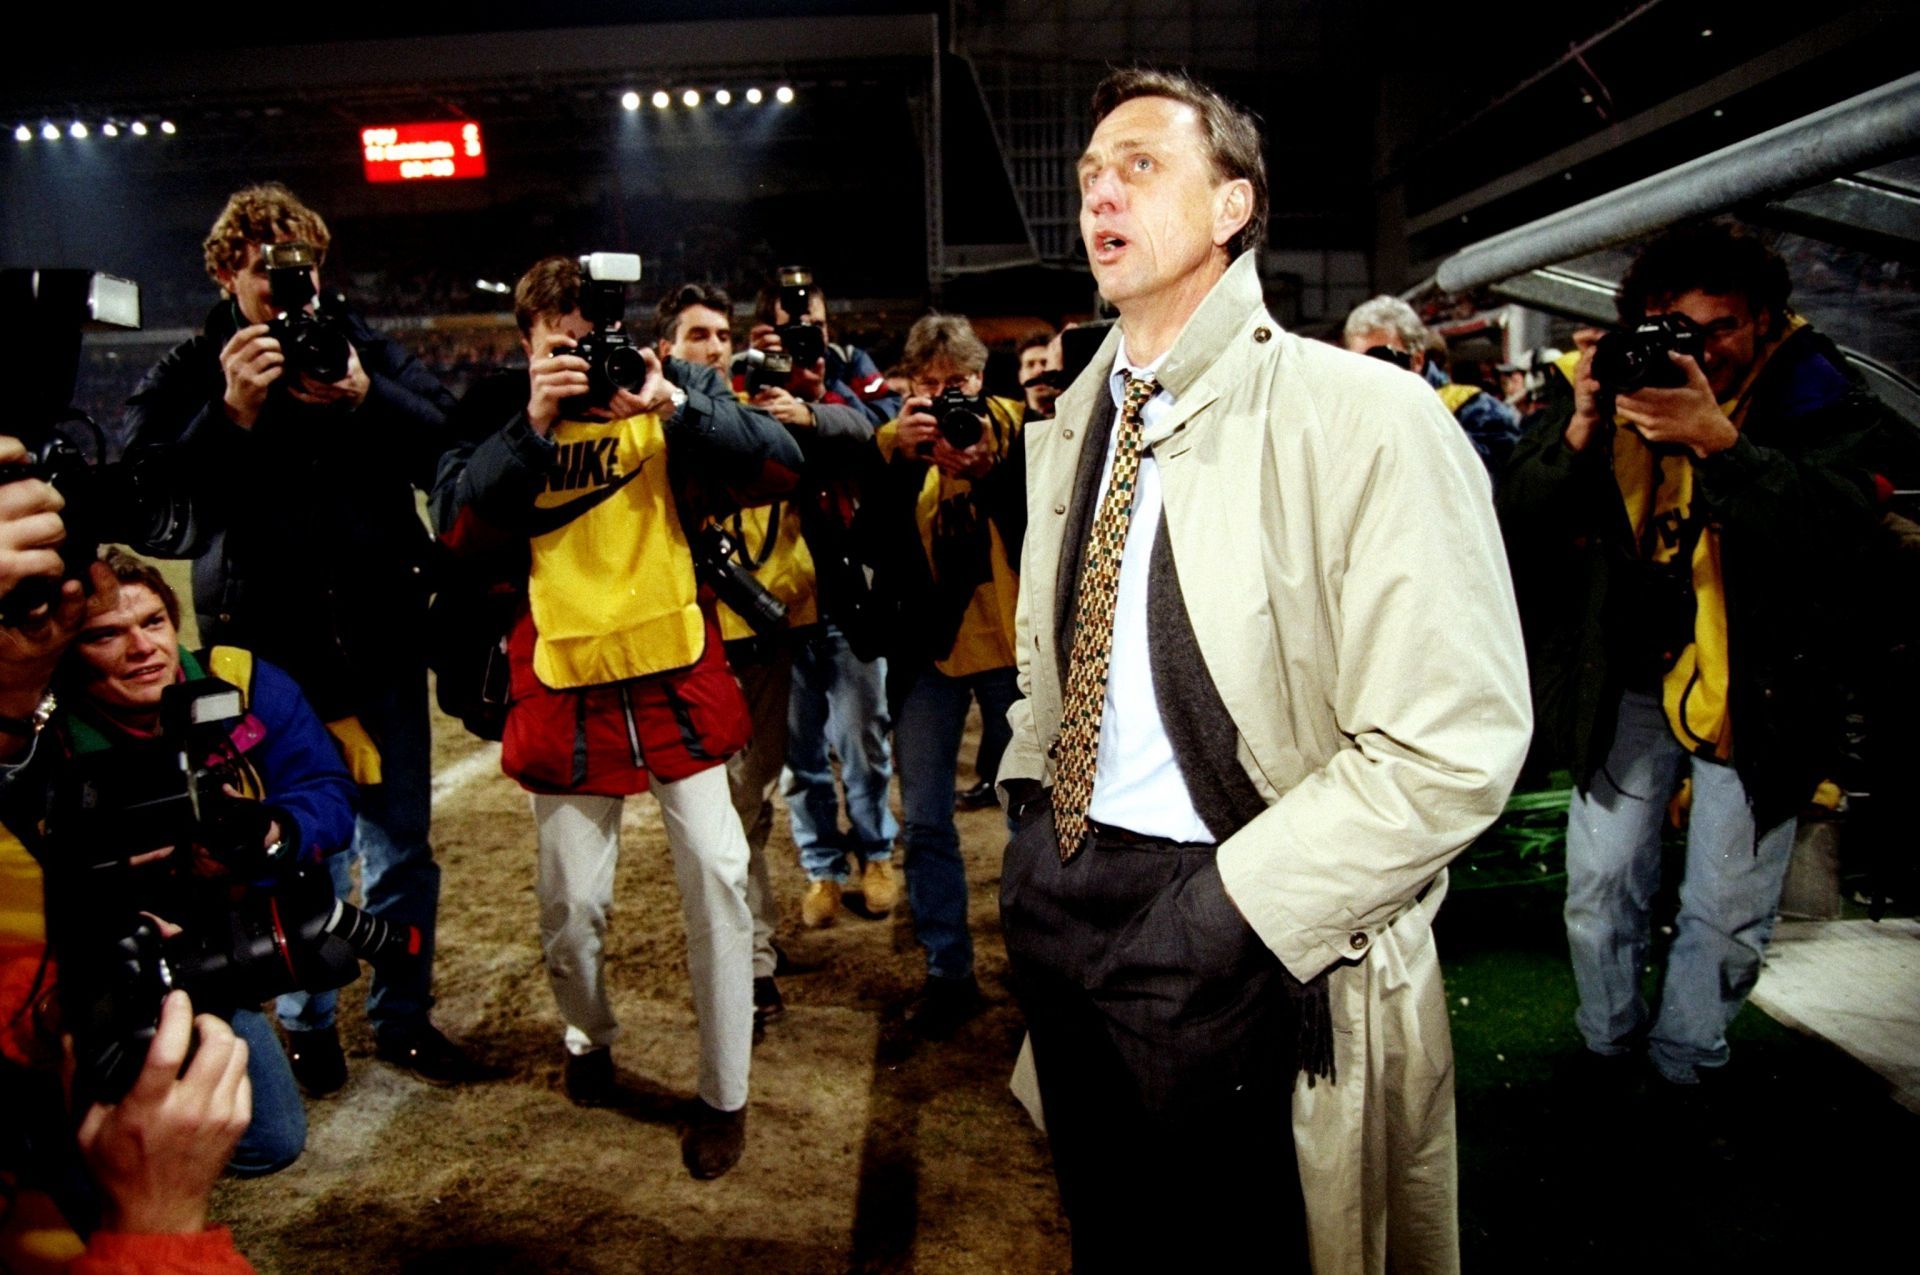 Johan Cruyff of FC Barcelona